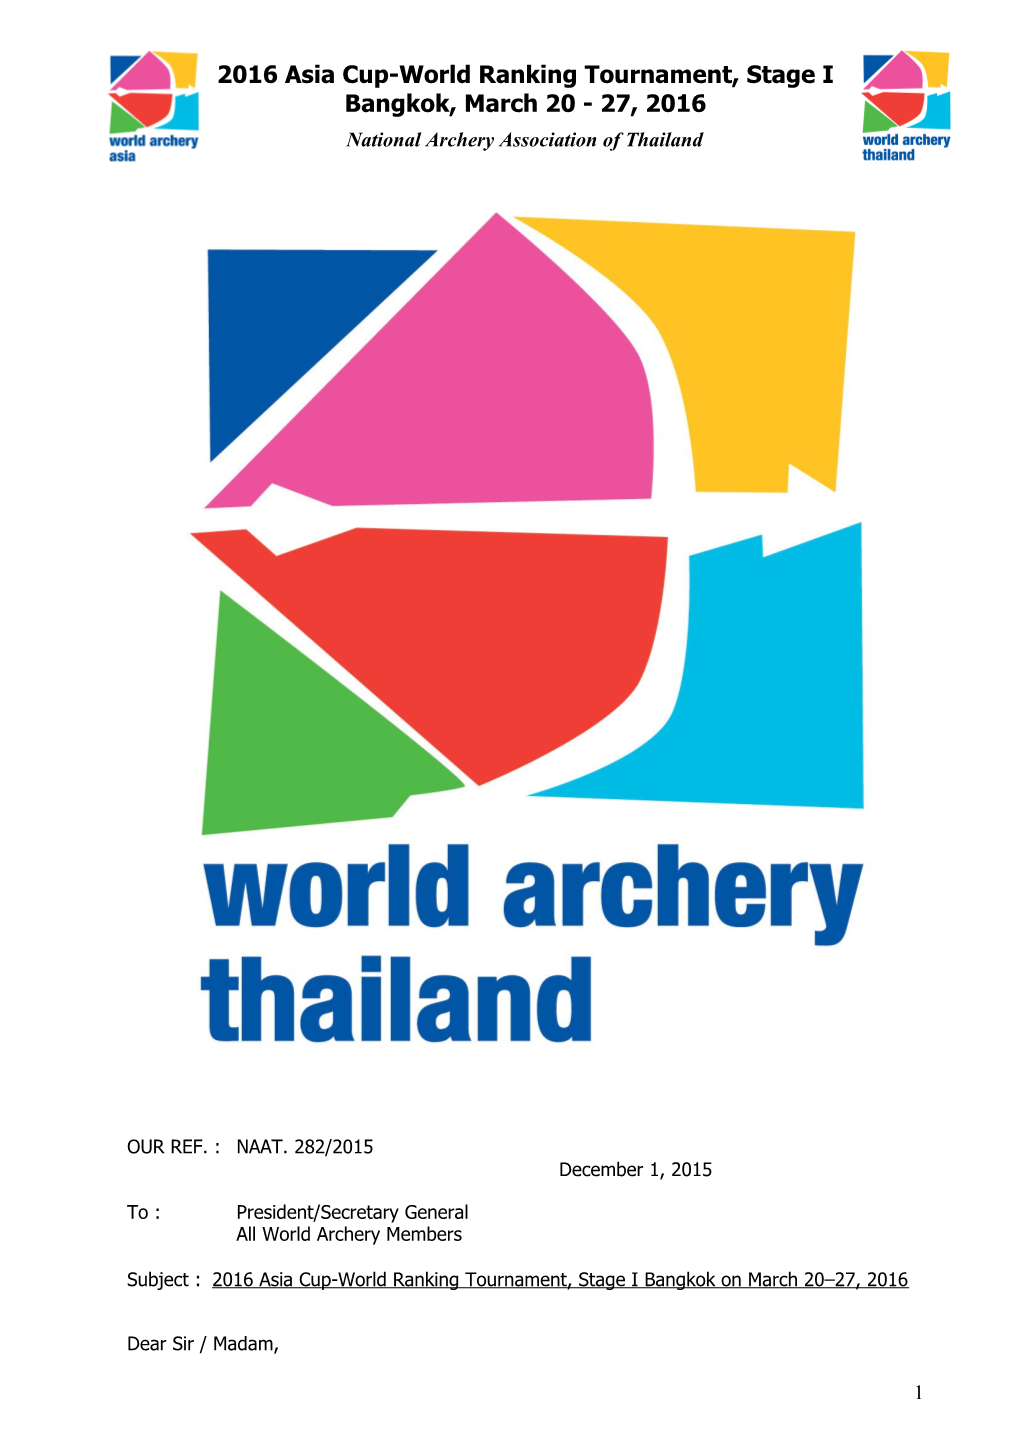 National Archery Association of Thailand